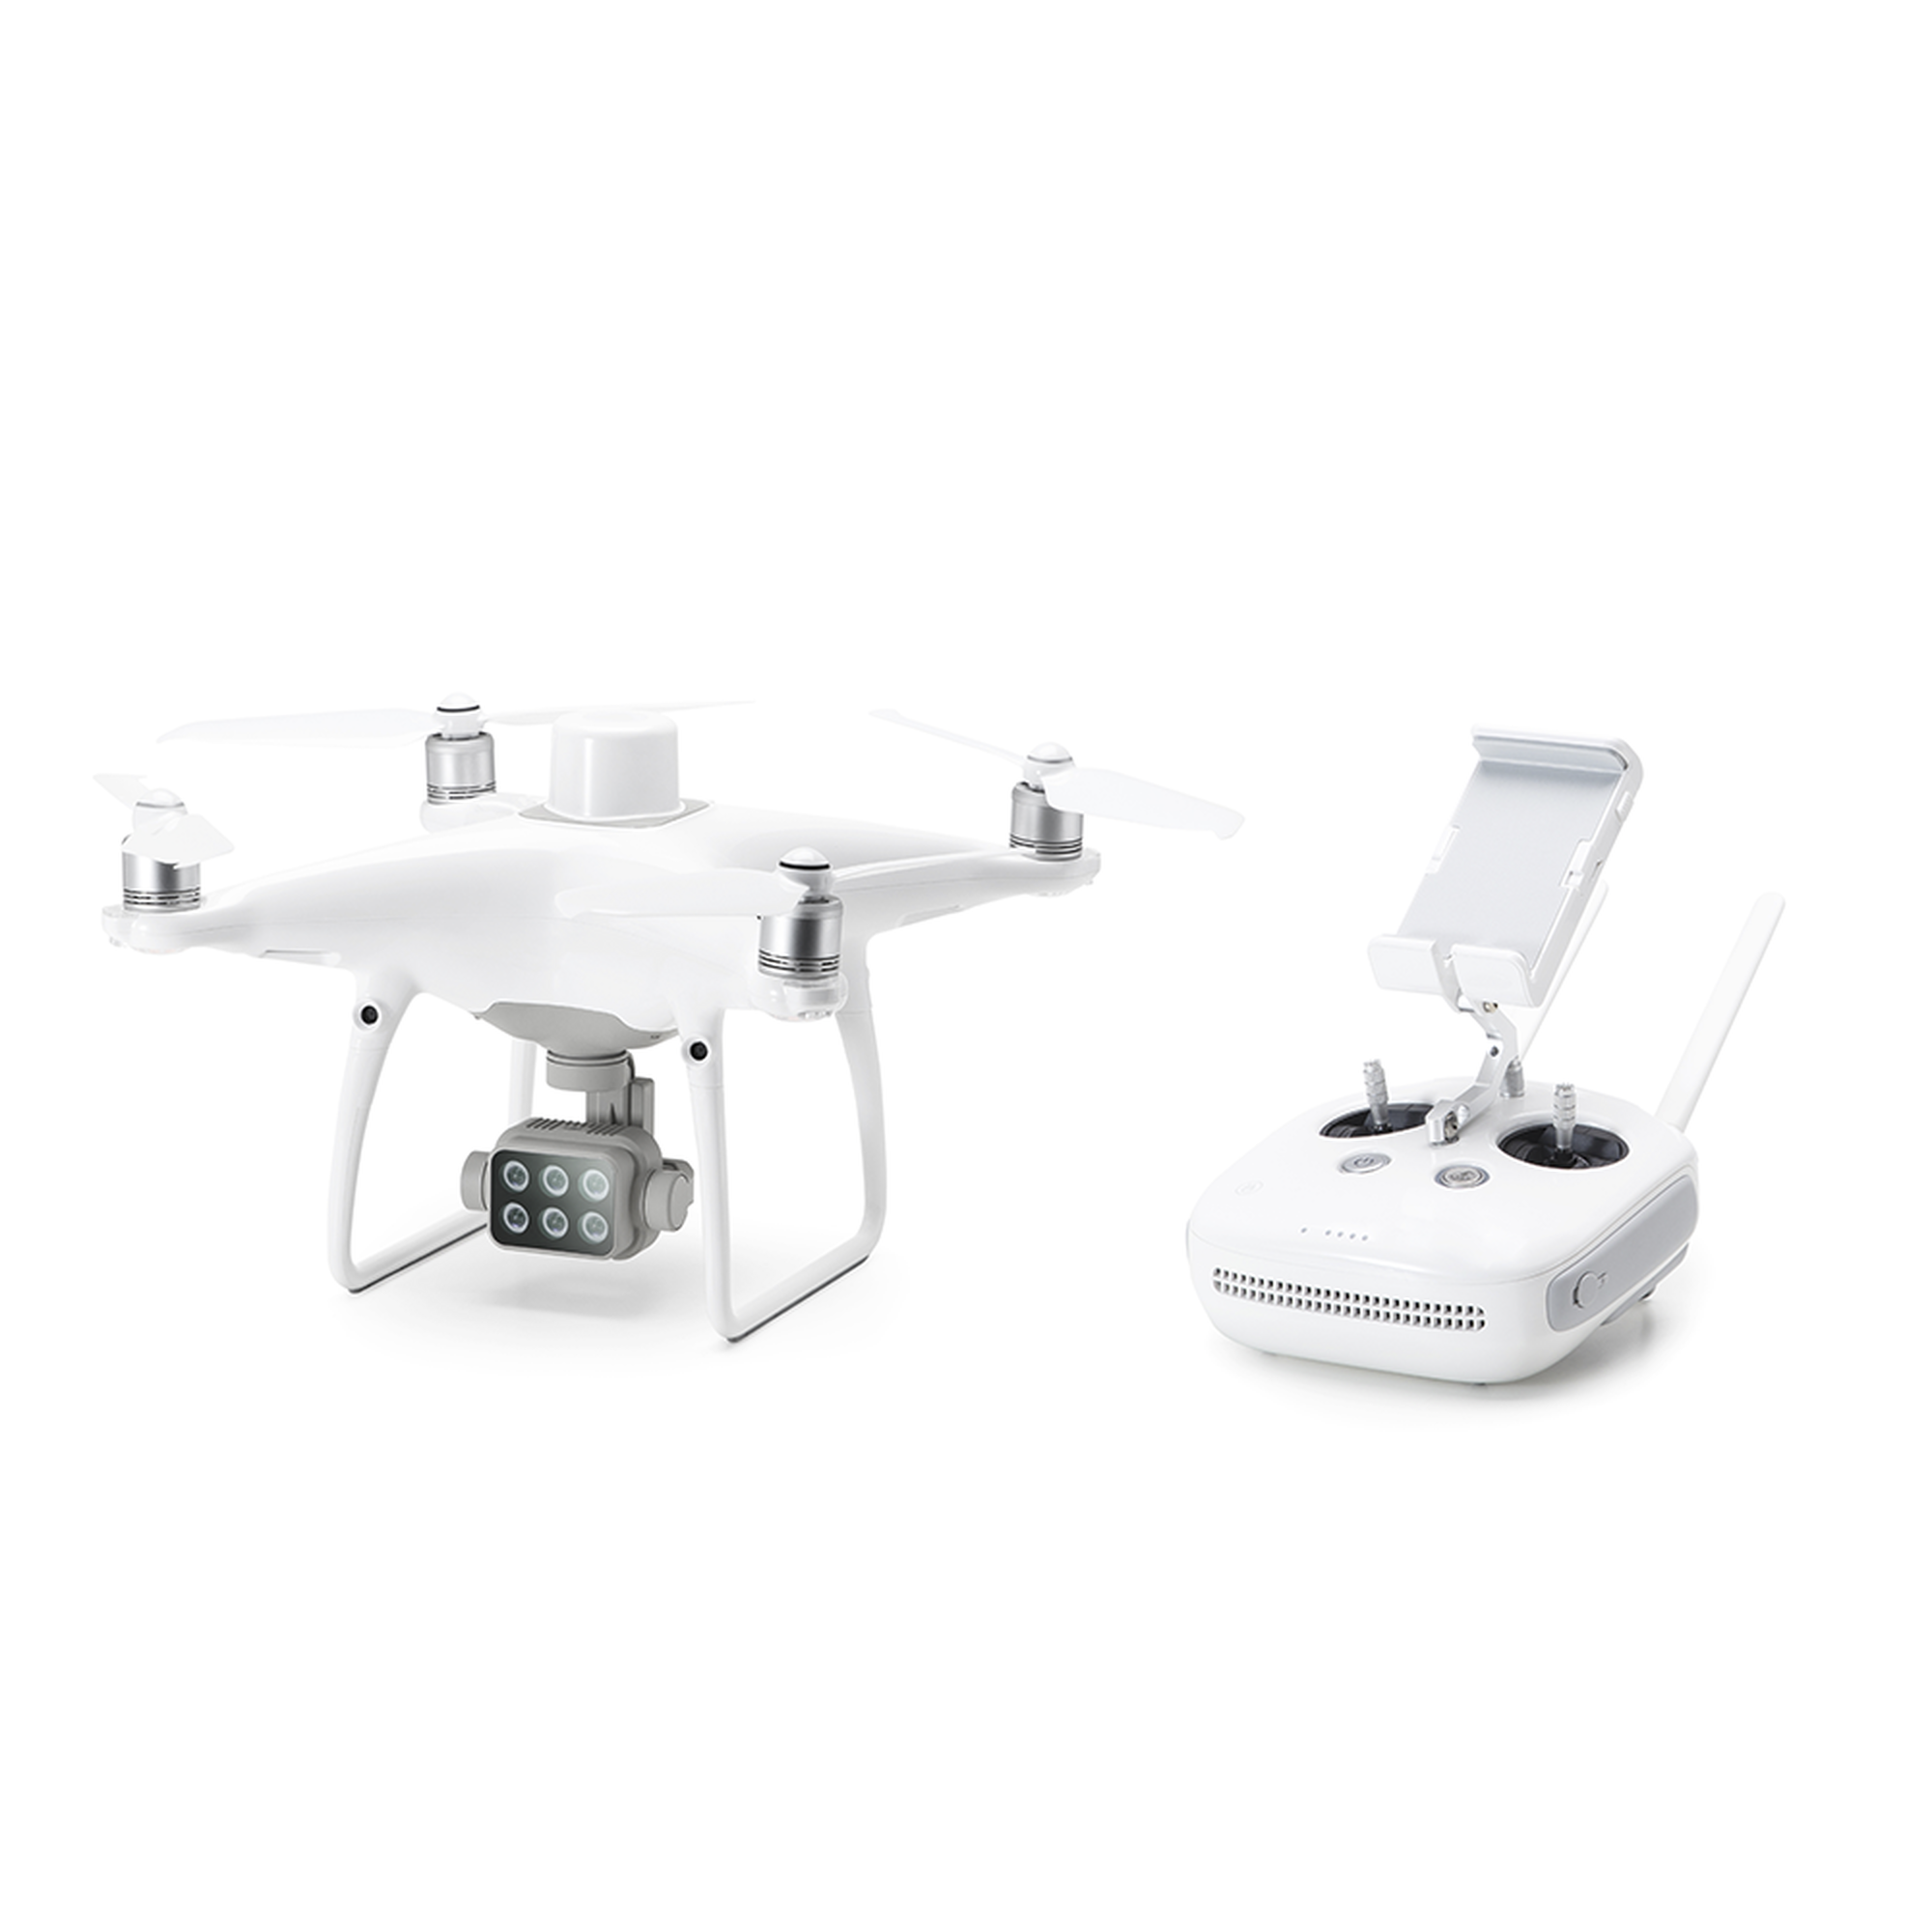 Drone DJI Phantom 4 Multiespectral/Edición Universal/ Ideal Para Agrimensura/ 27 Mins de Vuelo/ Hasta 7Kms de Transmisión de Video